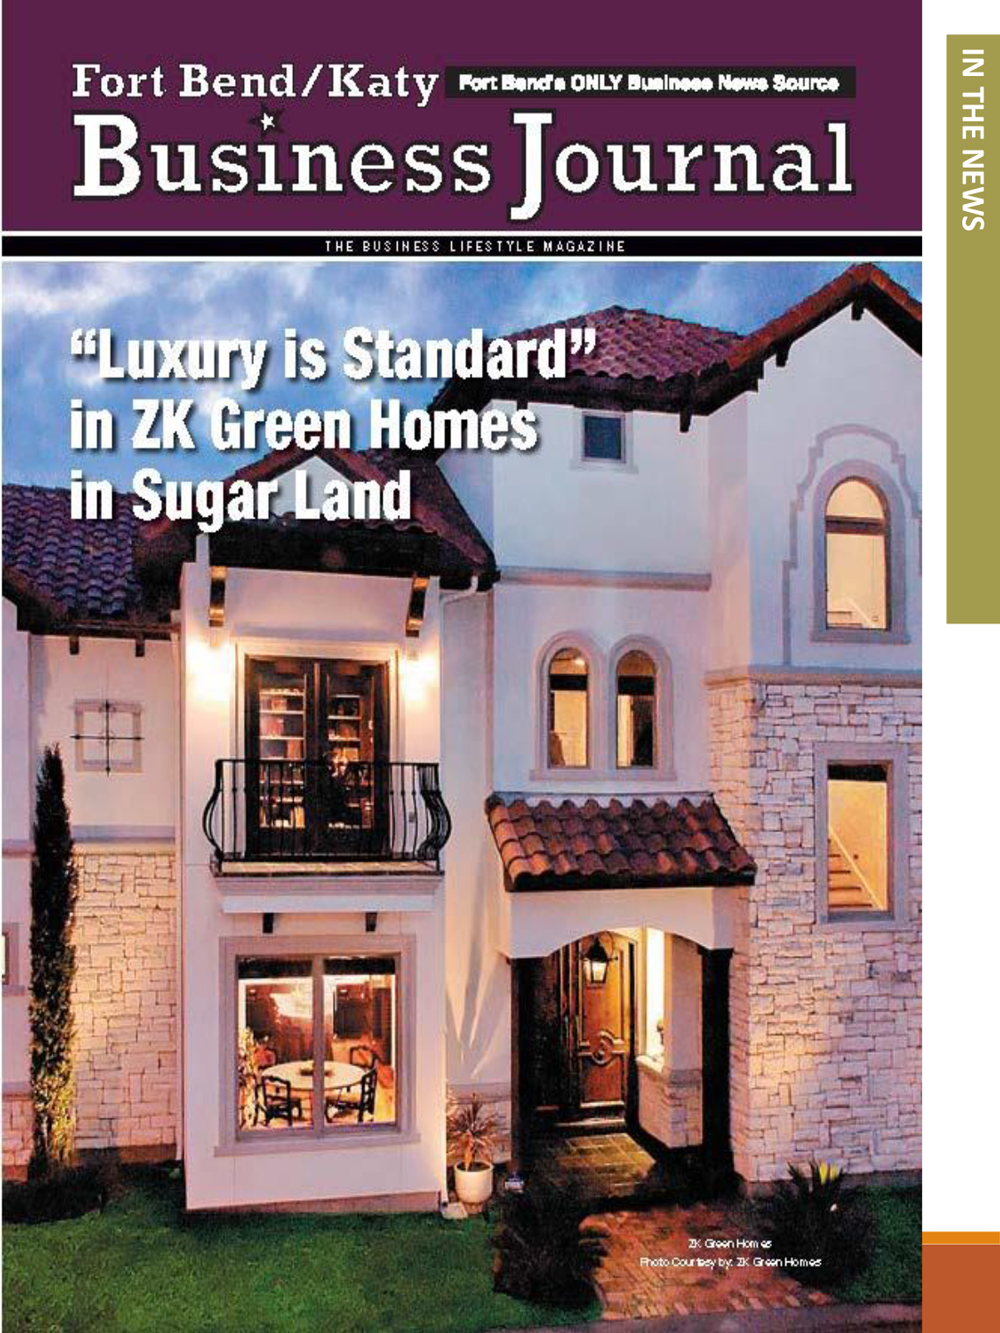 Luxury-is-Standard-in-ZK-Green-Homes-in-Sugar-Land